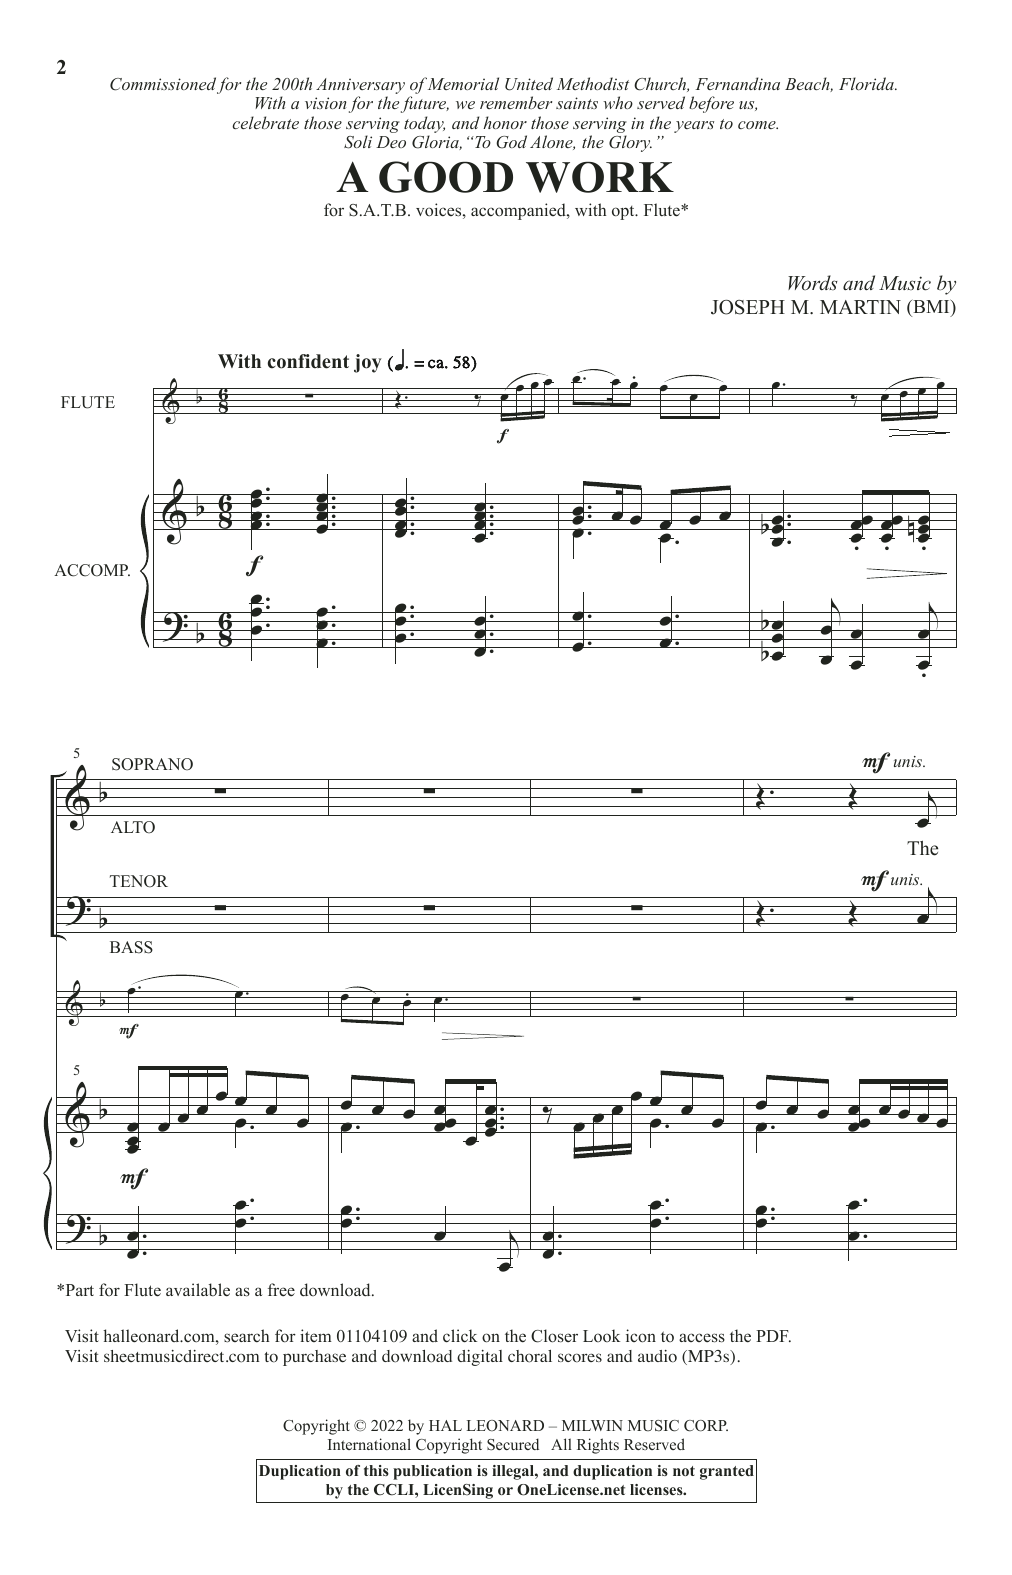 Joseph M. Martin A Good Work sheet music notes and chords arranged for SATB Choir